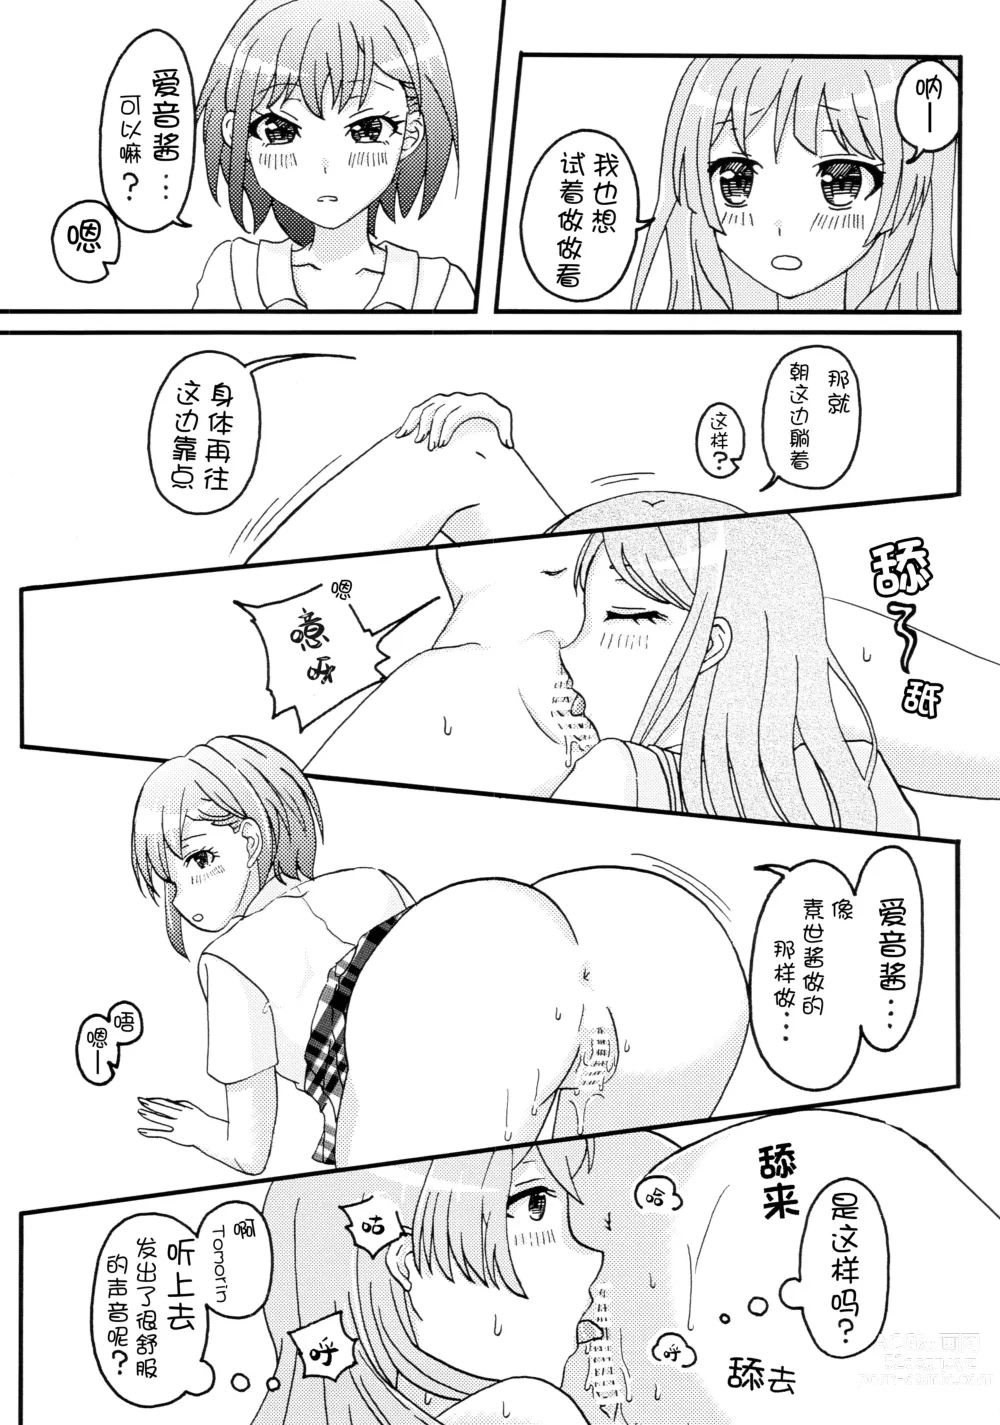 Page 8 of doujinshi C103 Omake